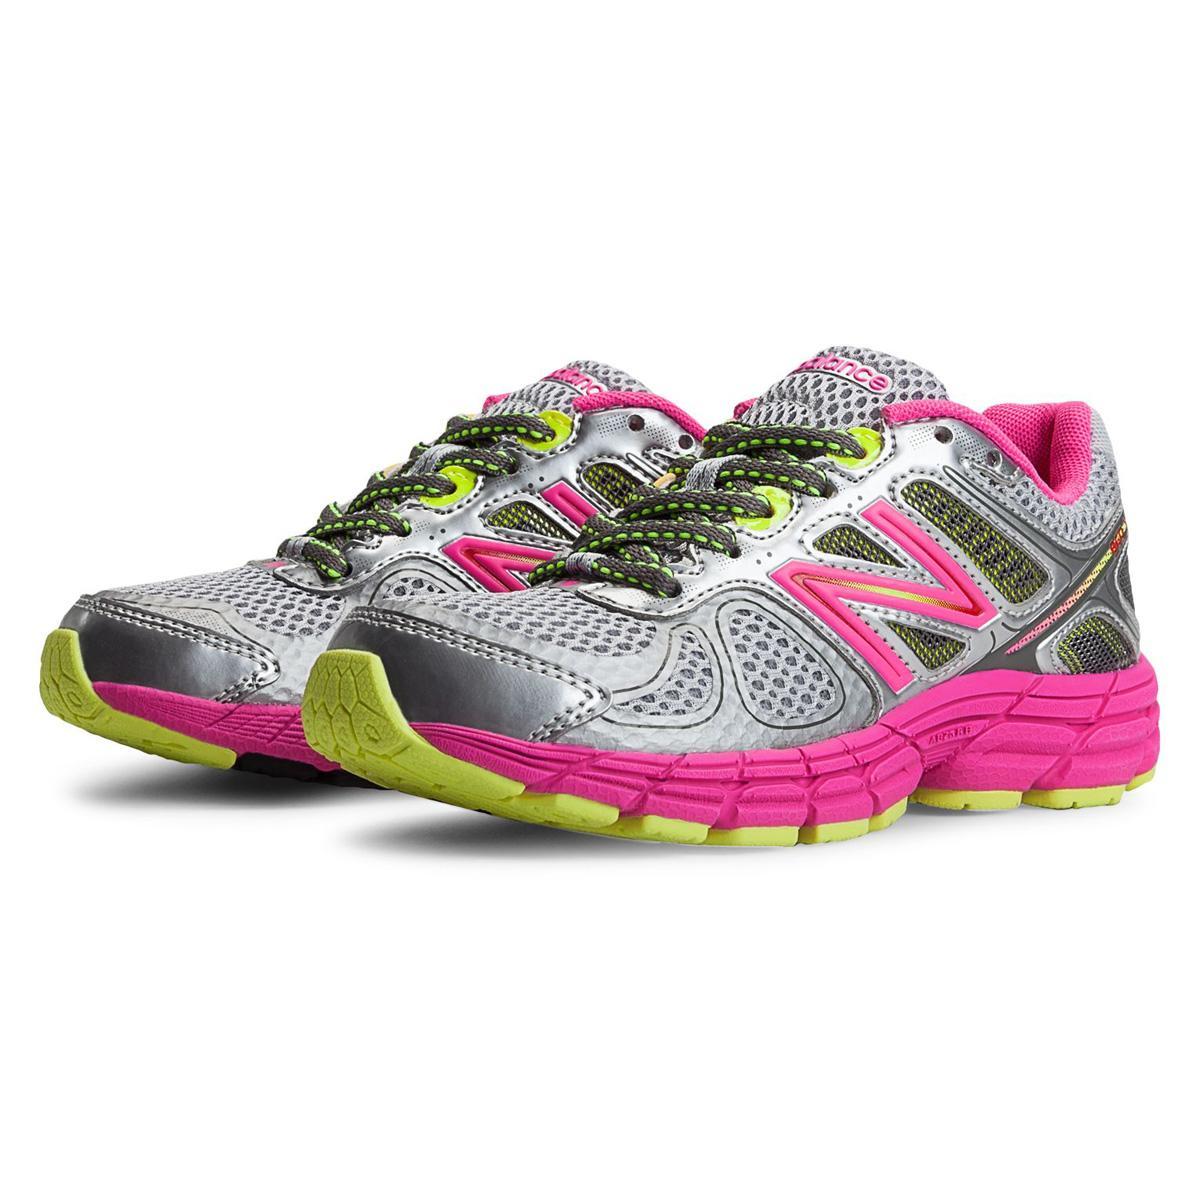 New Balance 860v4 Girls Running Shoes - Grey/Pink - Tennisnuts.com